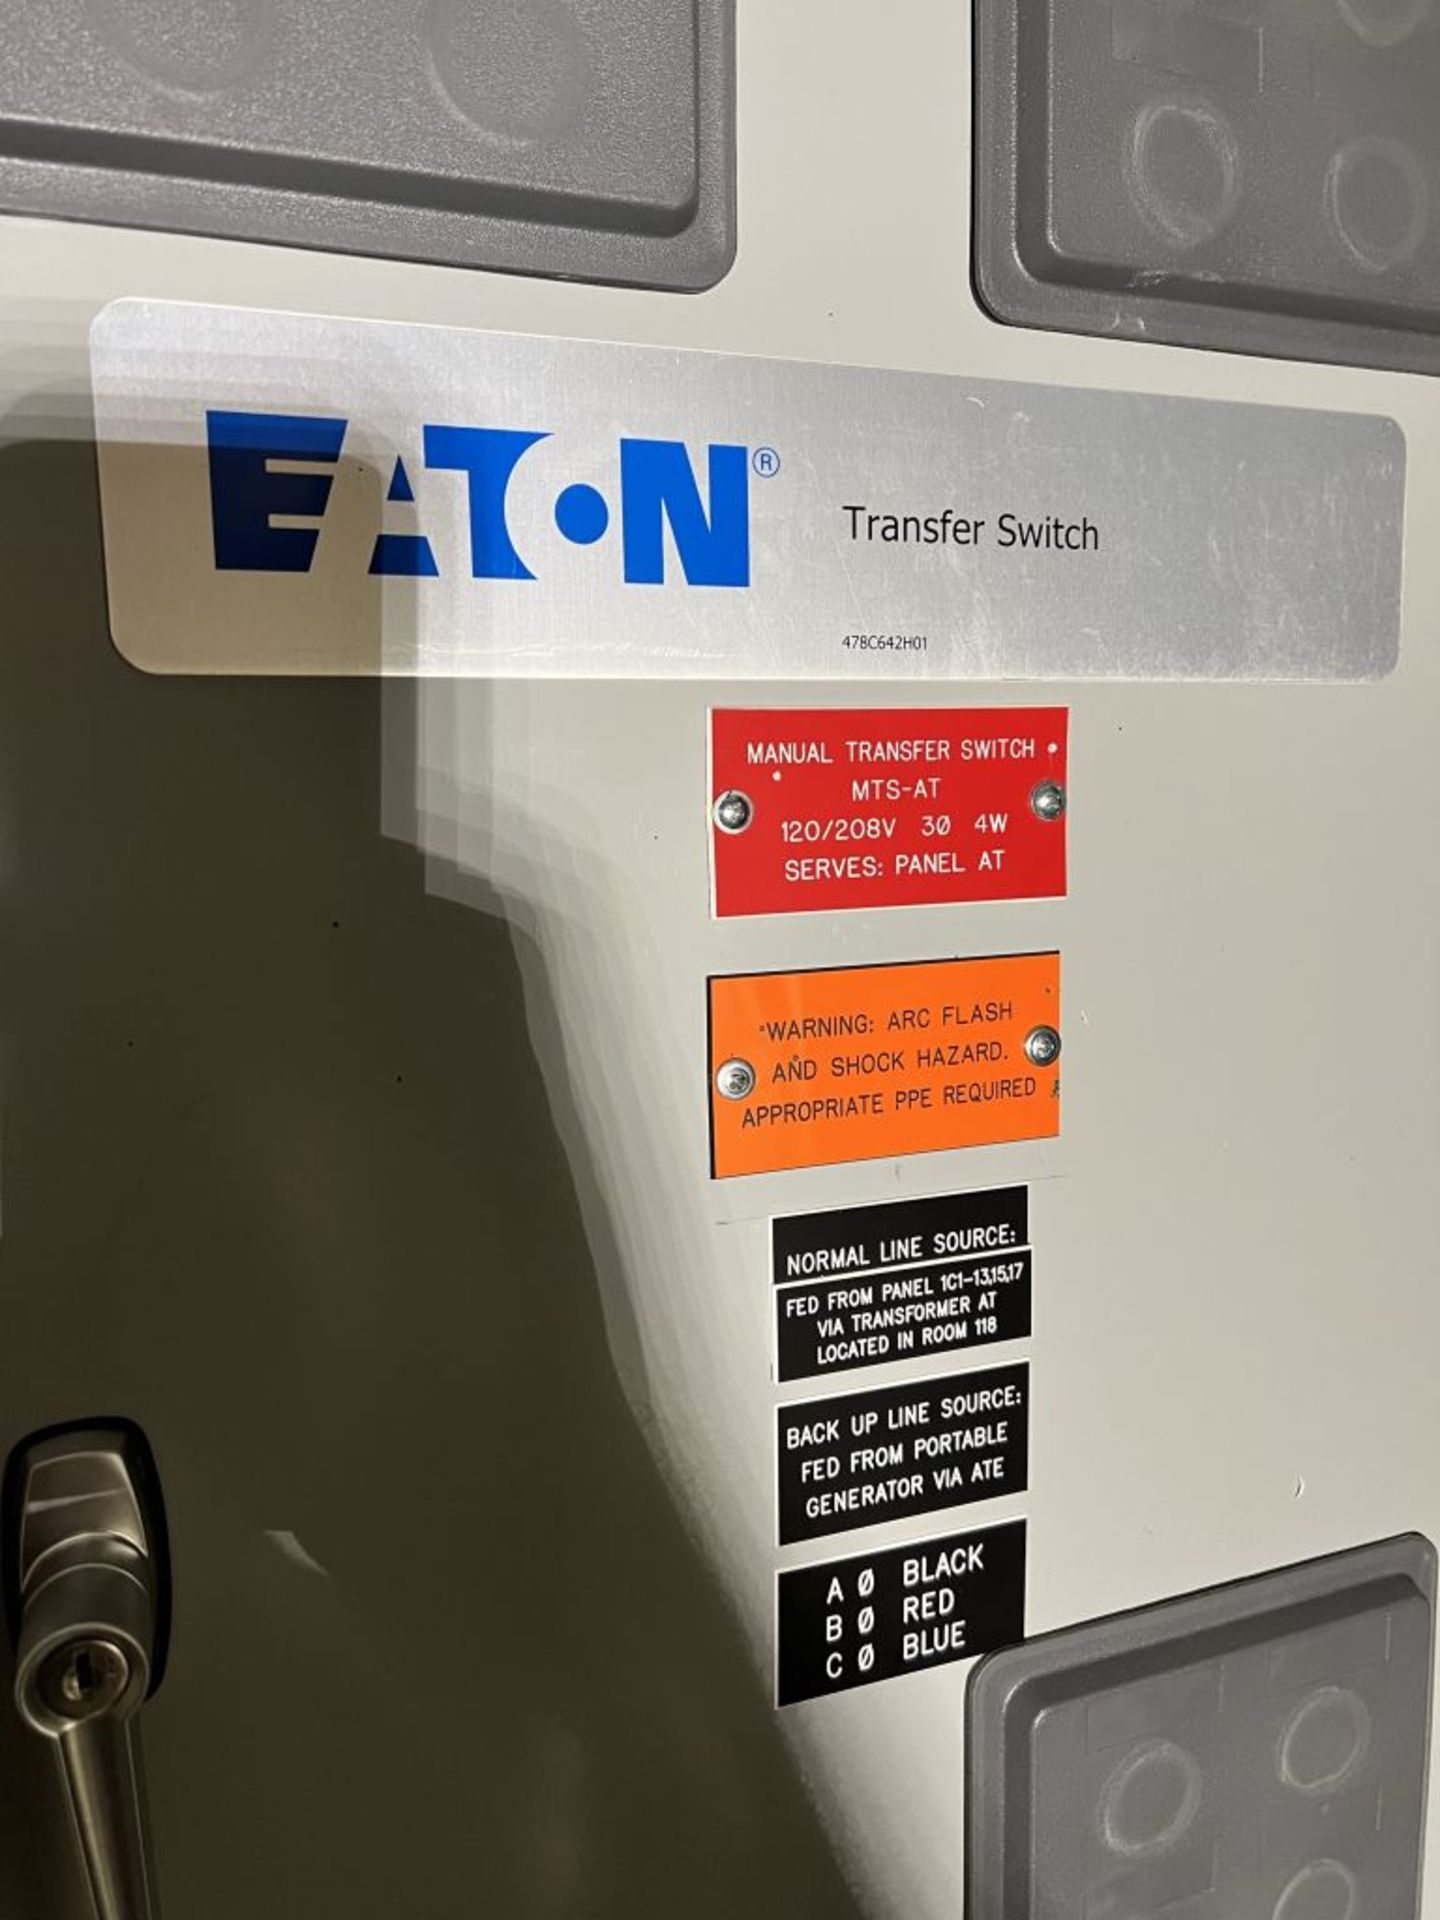 Spartanburg, SC - Eaton Transfer Switch - Image 3 of 6